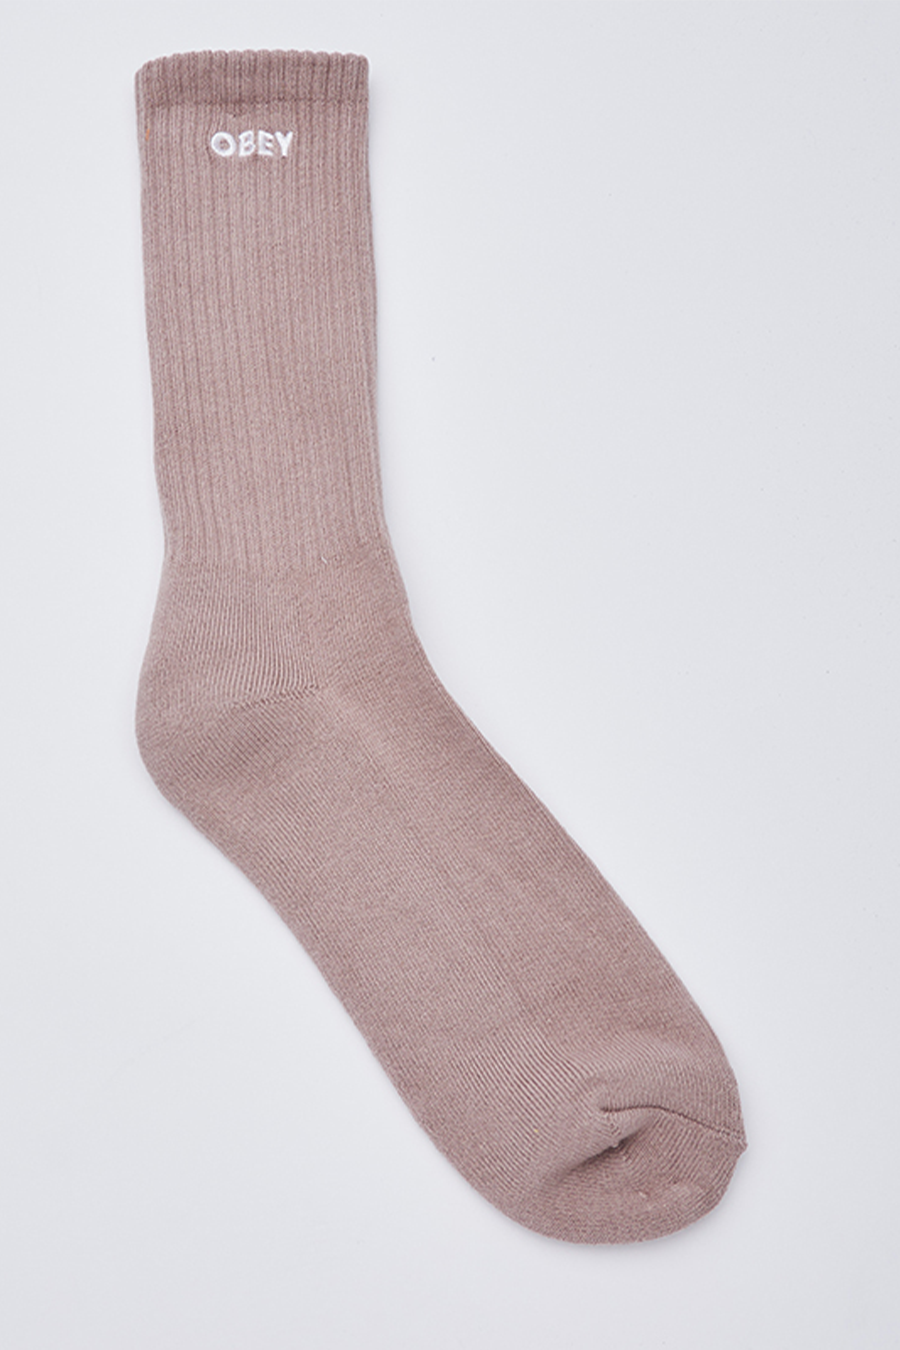 Bold Socks | Gallnut - Main Image Number 1 of 1